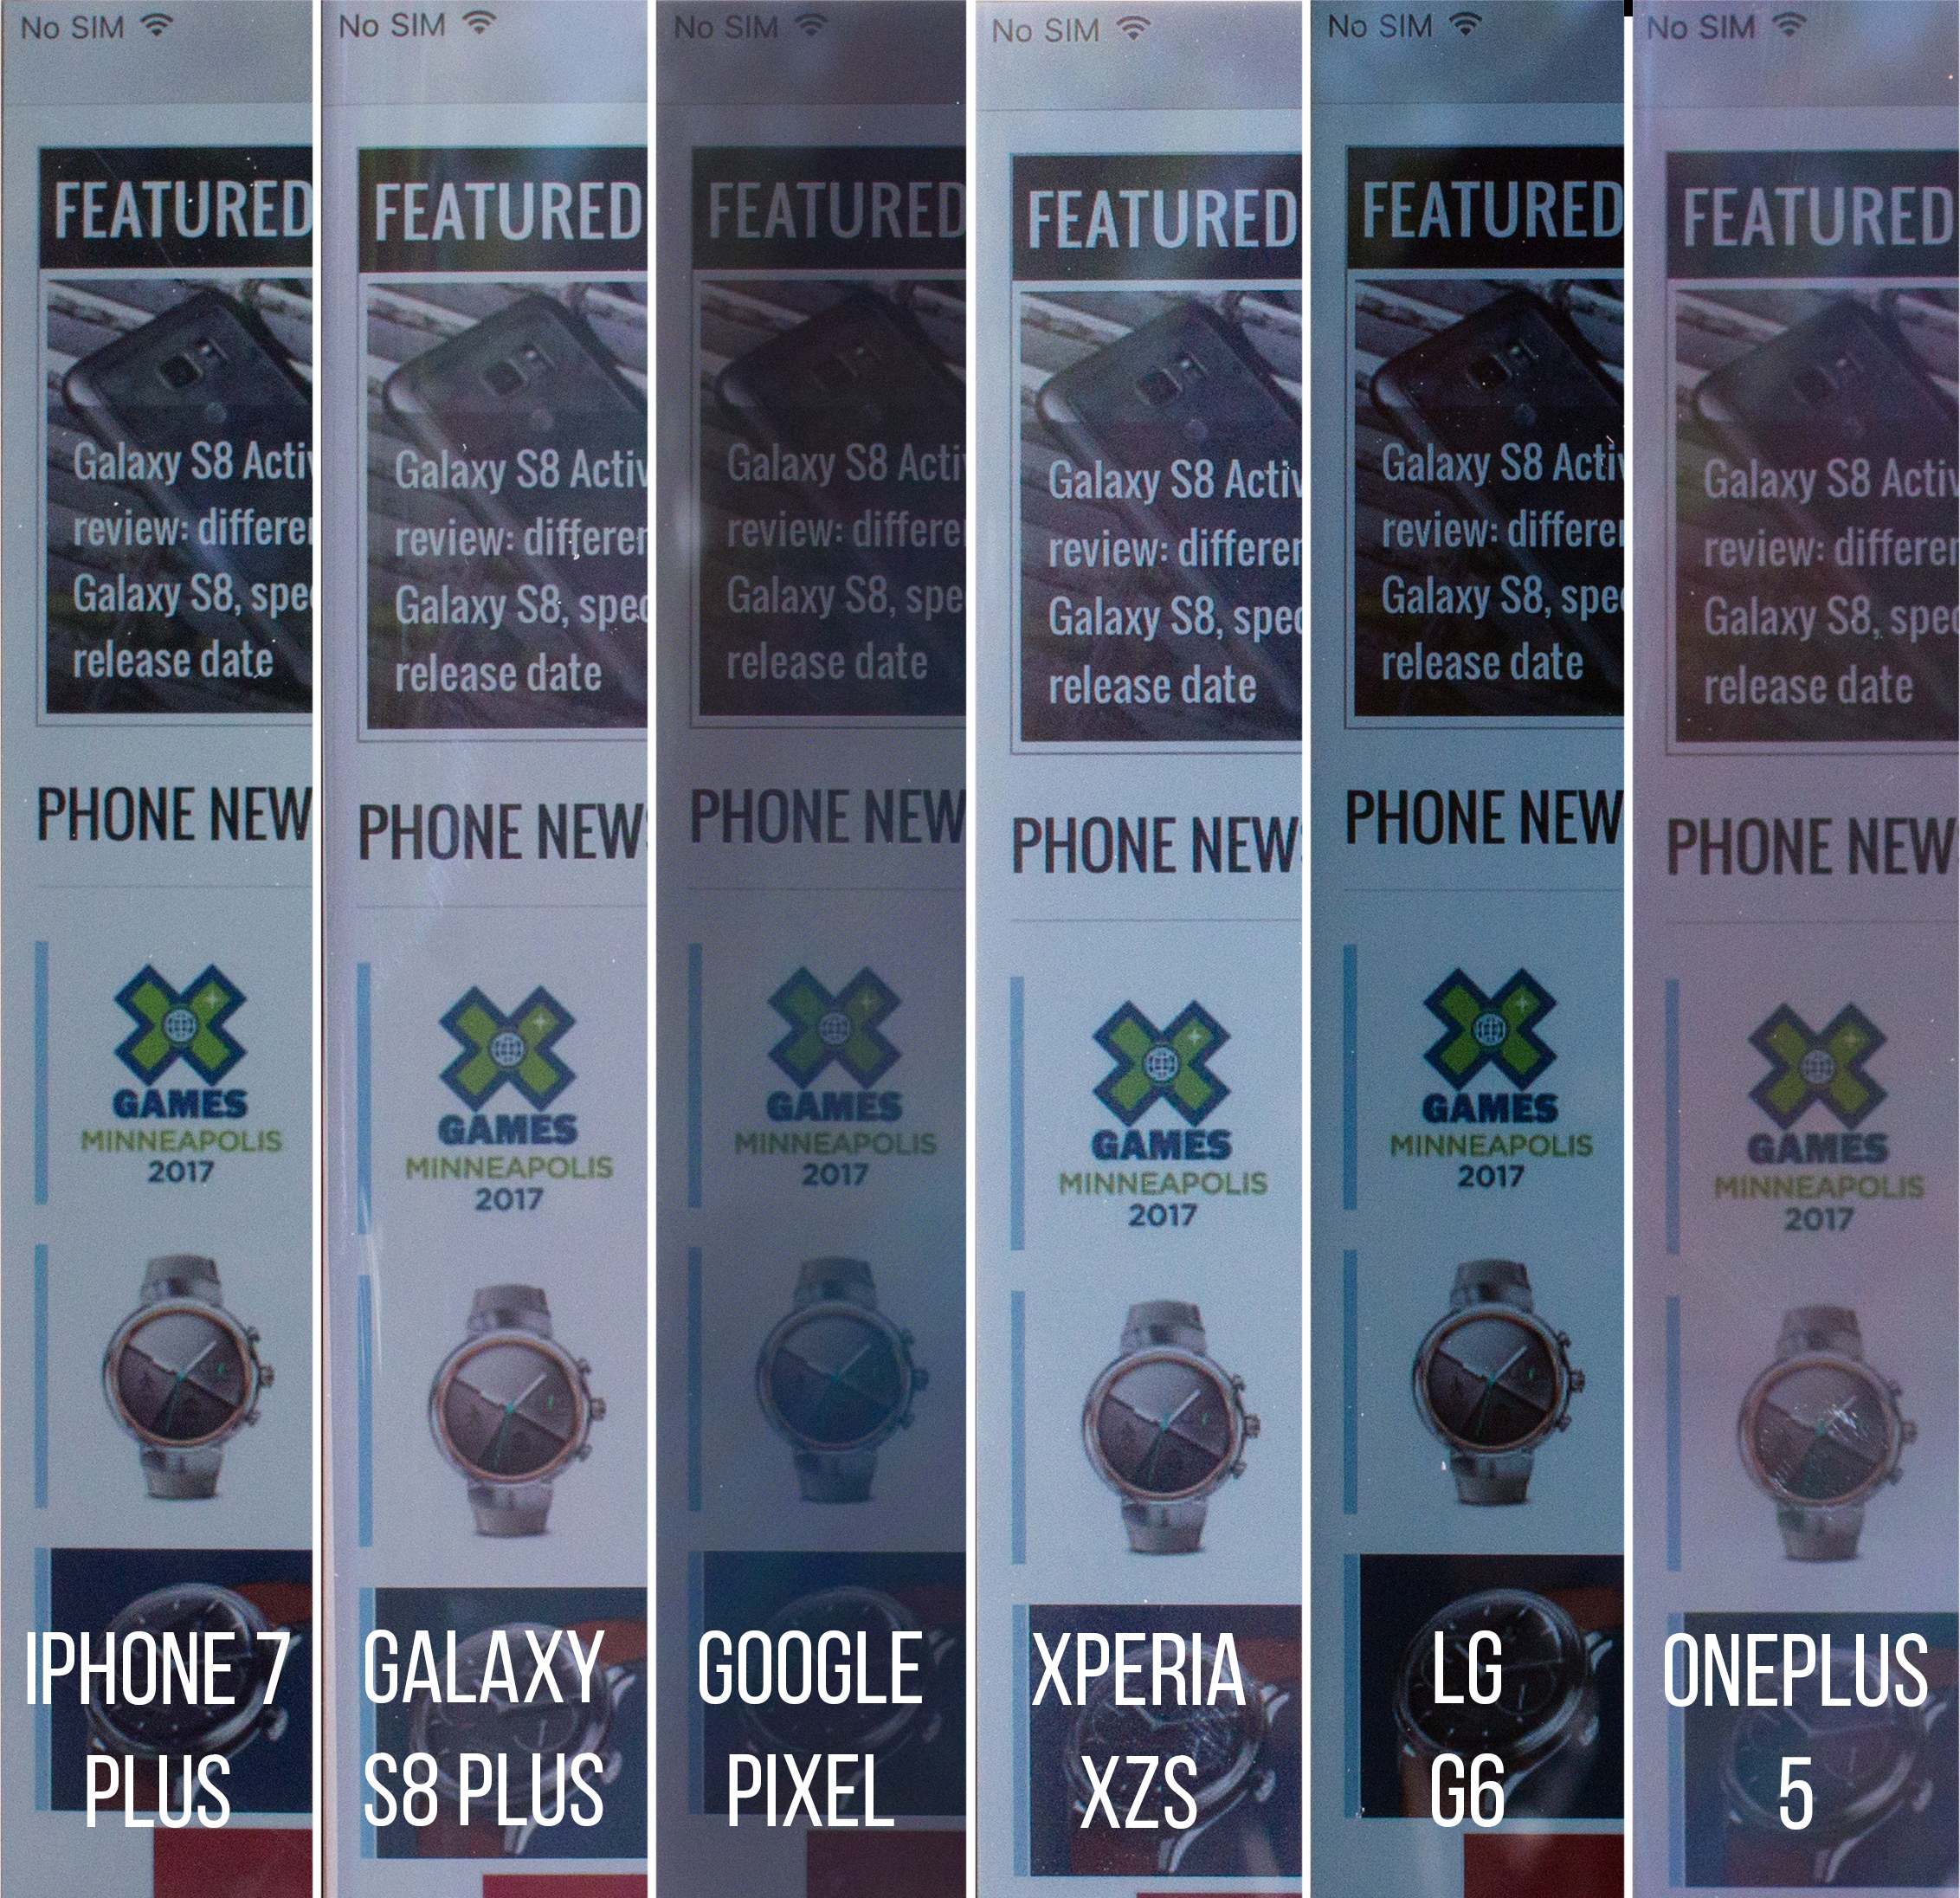 iphone 7 galaxy s8 oneplus 5 schermvergelijking 2